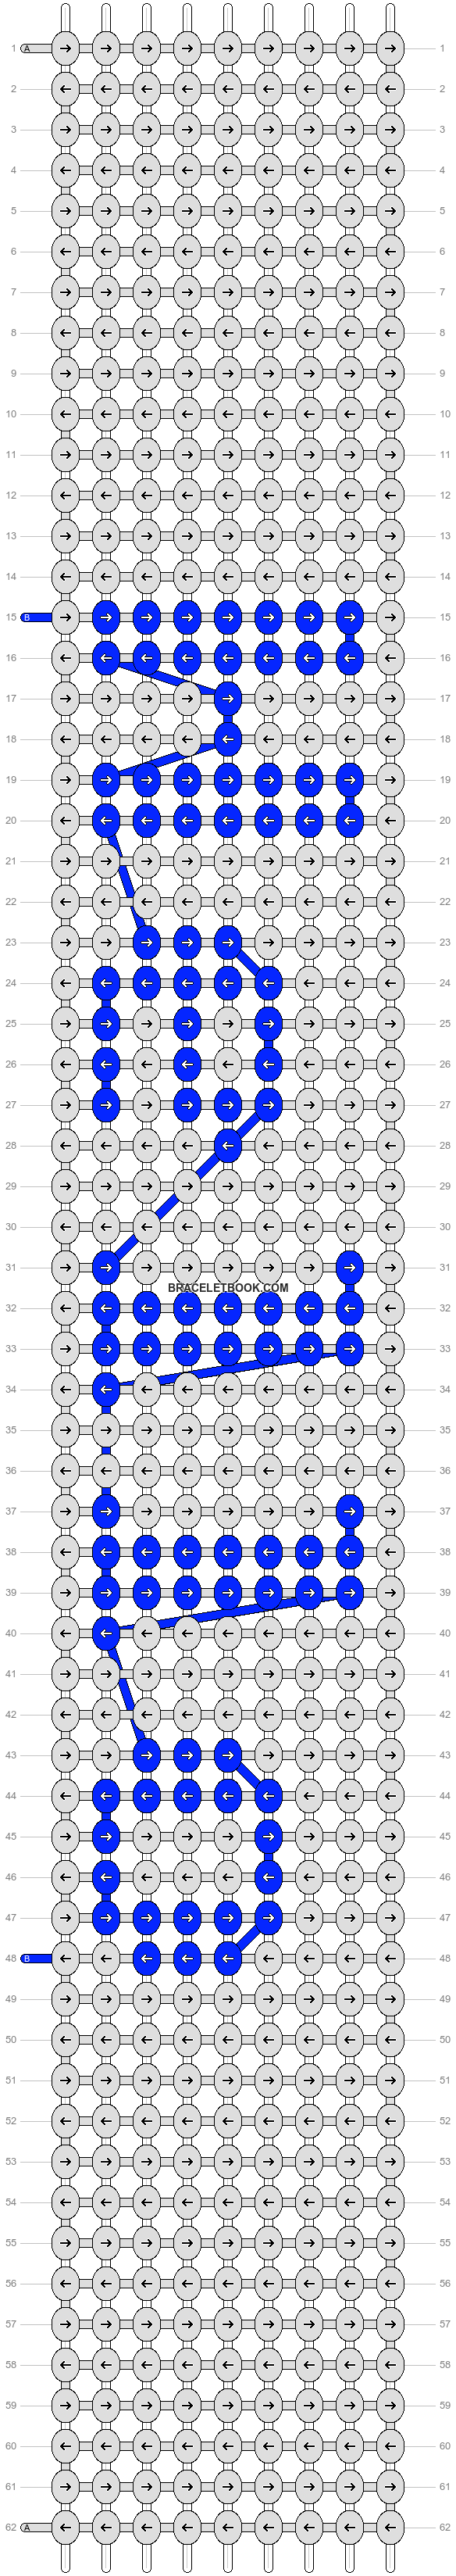 Alpha pattern #22041 pattern